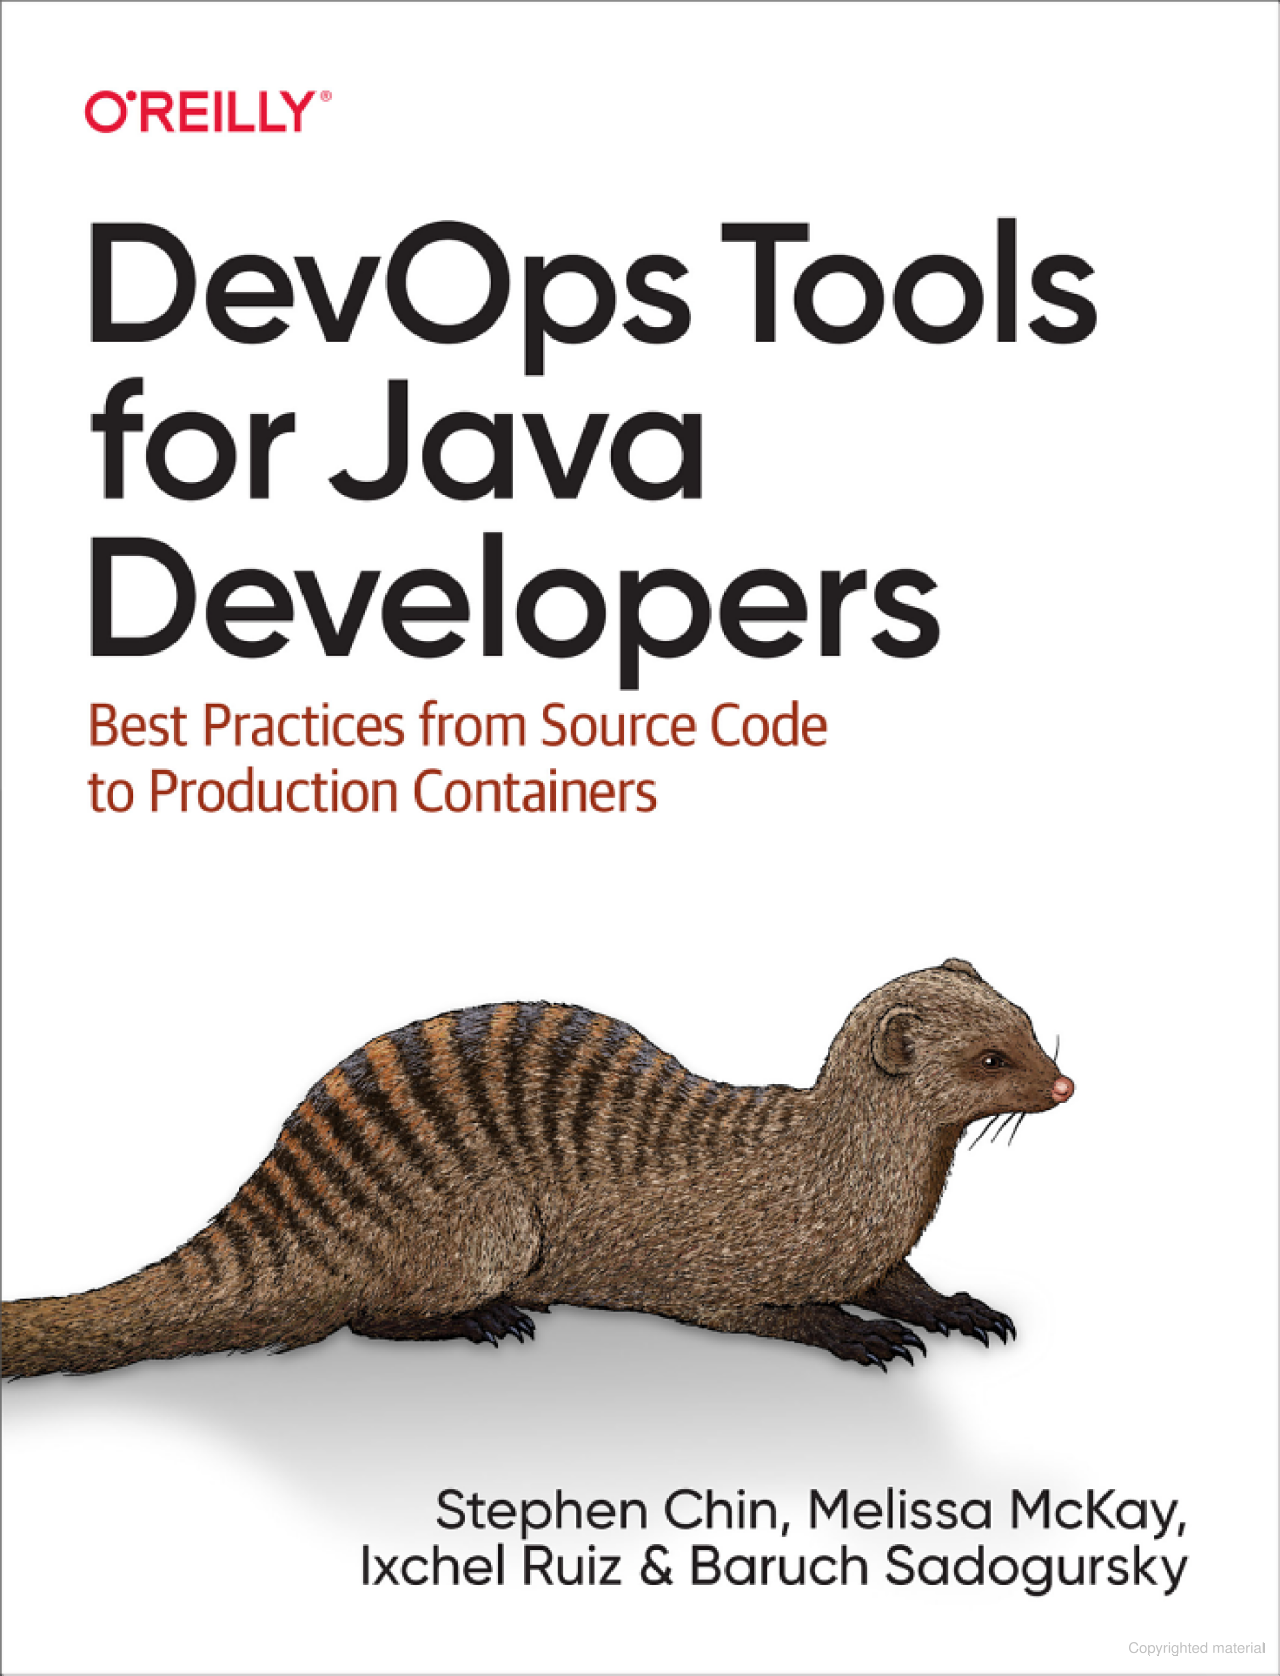 Book Review: DevOps Tools for Java Developers